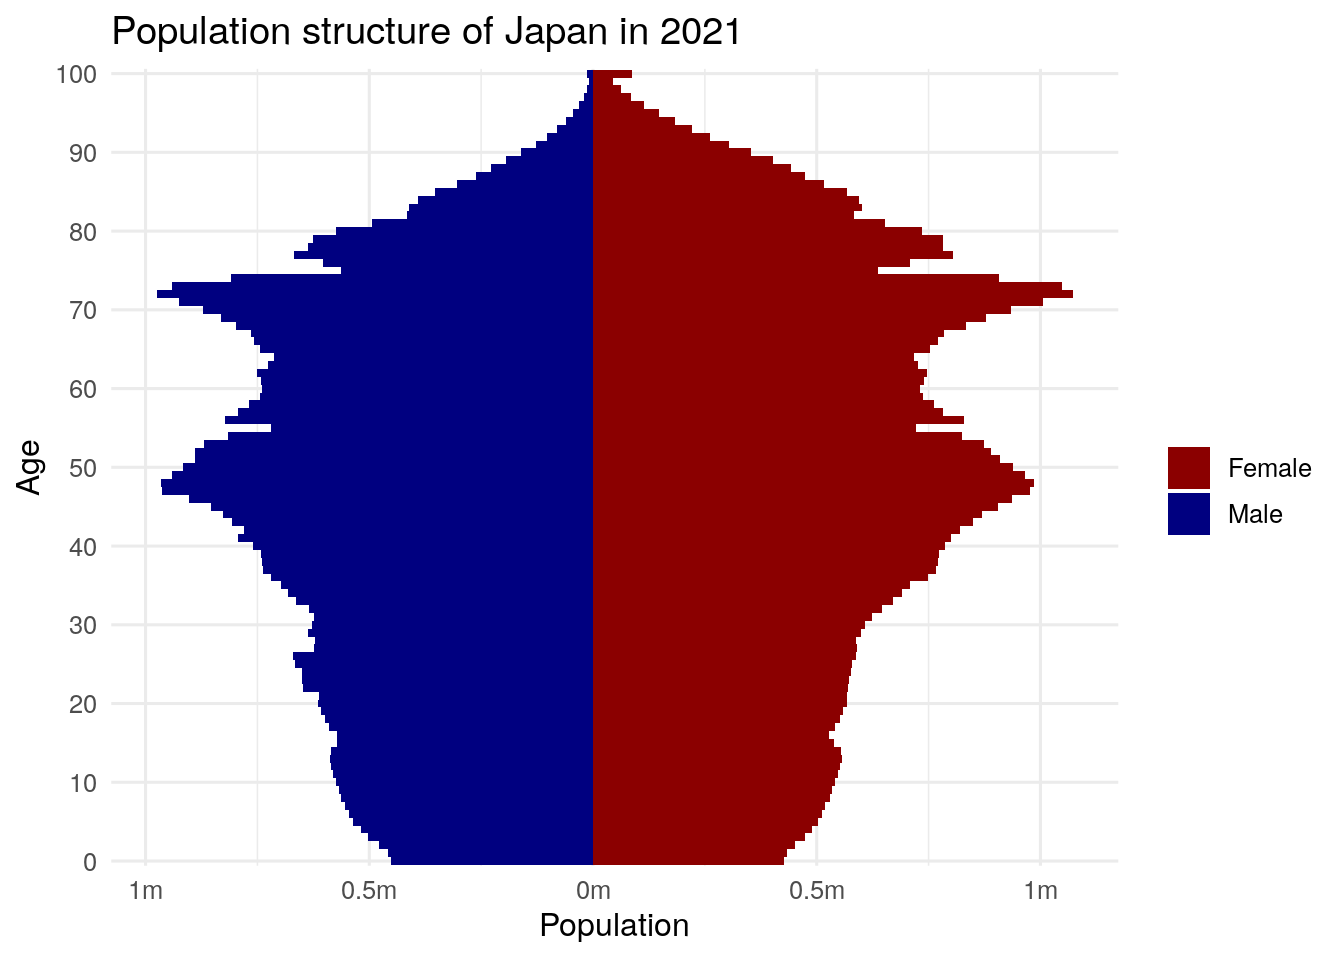 Population pyramid for Japan